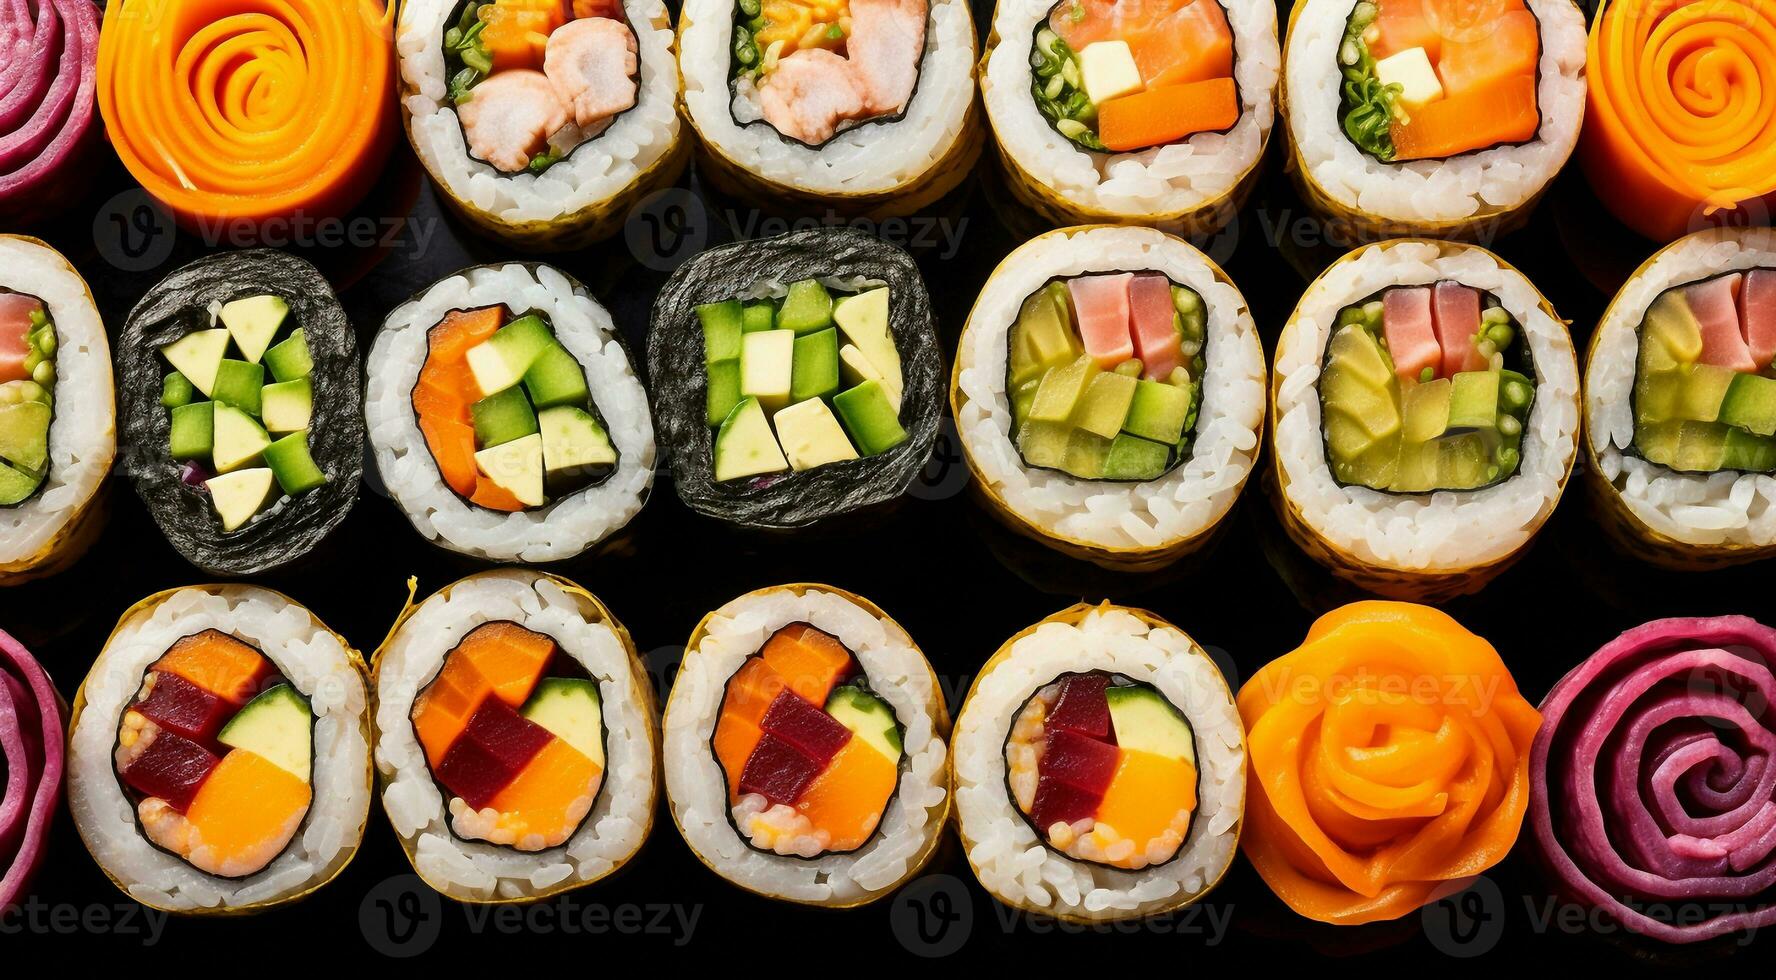 ai genererad närbild av sushi rullar på de tabell, sushi rullar uppsättning, sushi bakgrund, uppsättning av sushi rullar, skaldjur uppsättning, designad shushi rullar foto